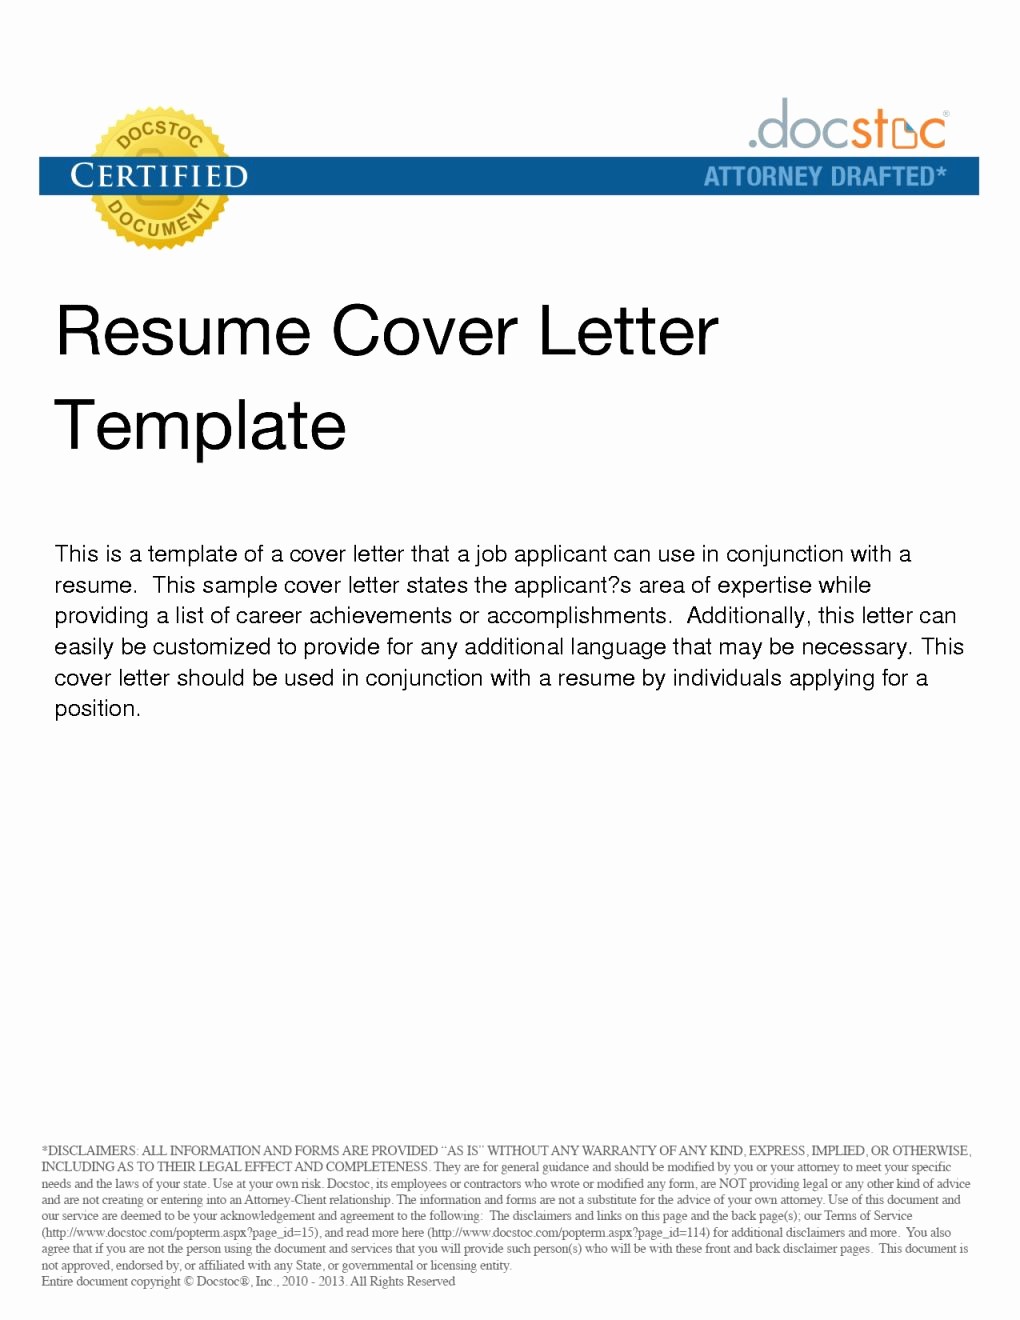 Resume Cover Letter Template Free Lovely Simple Email Cover Letter for Resume Awesome Cover Letter